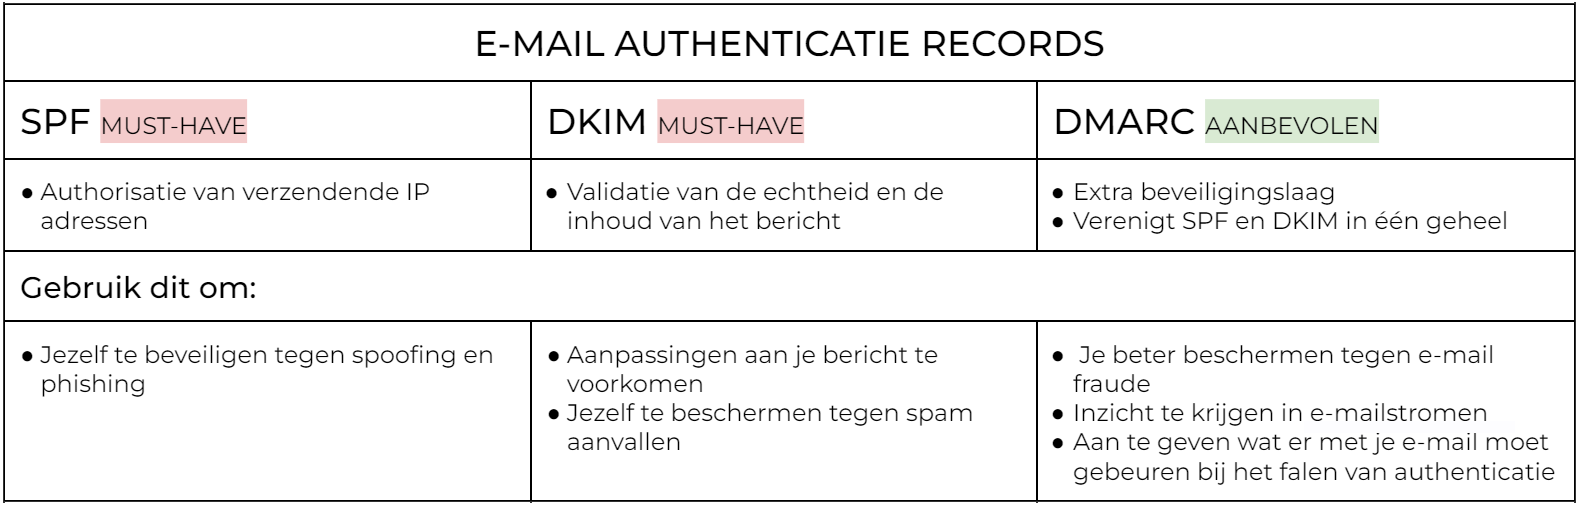 Authentication records